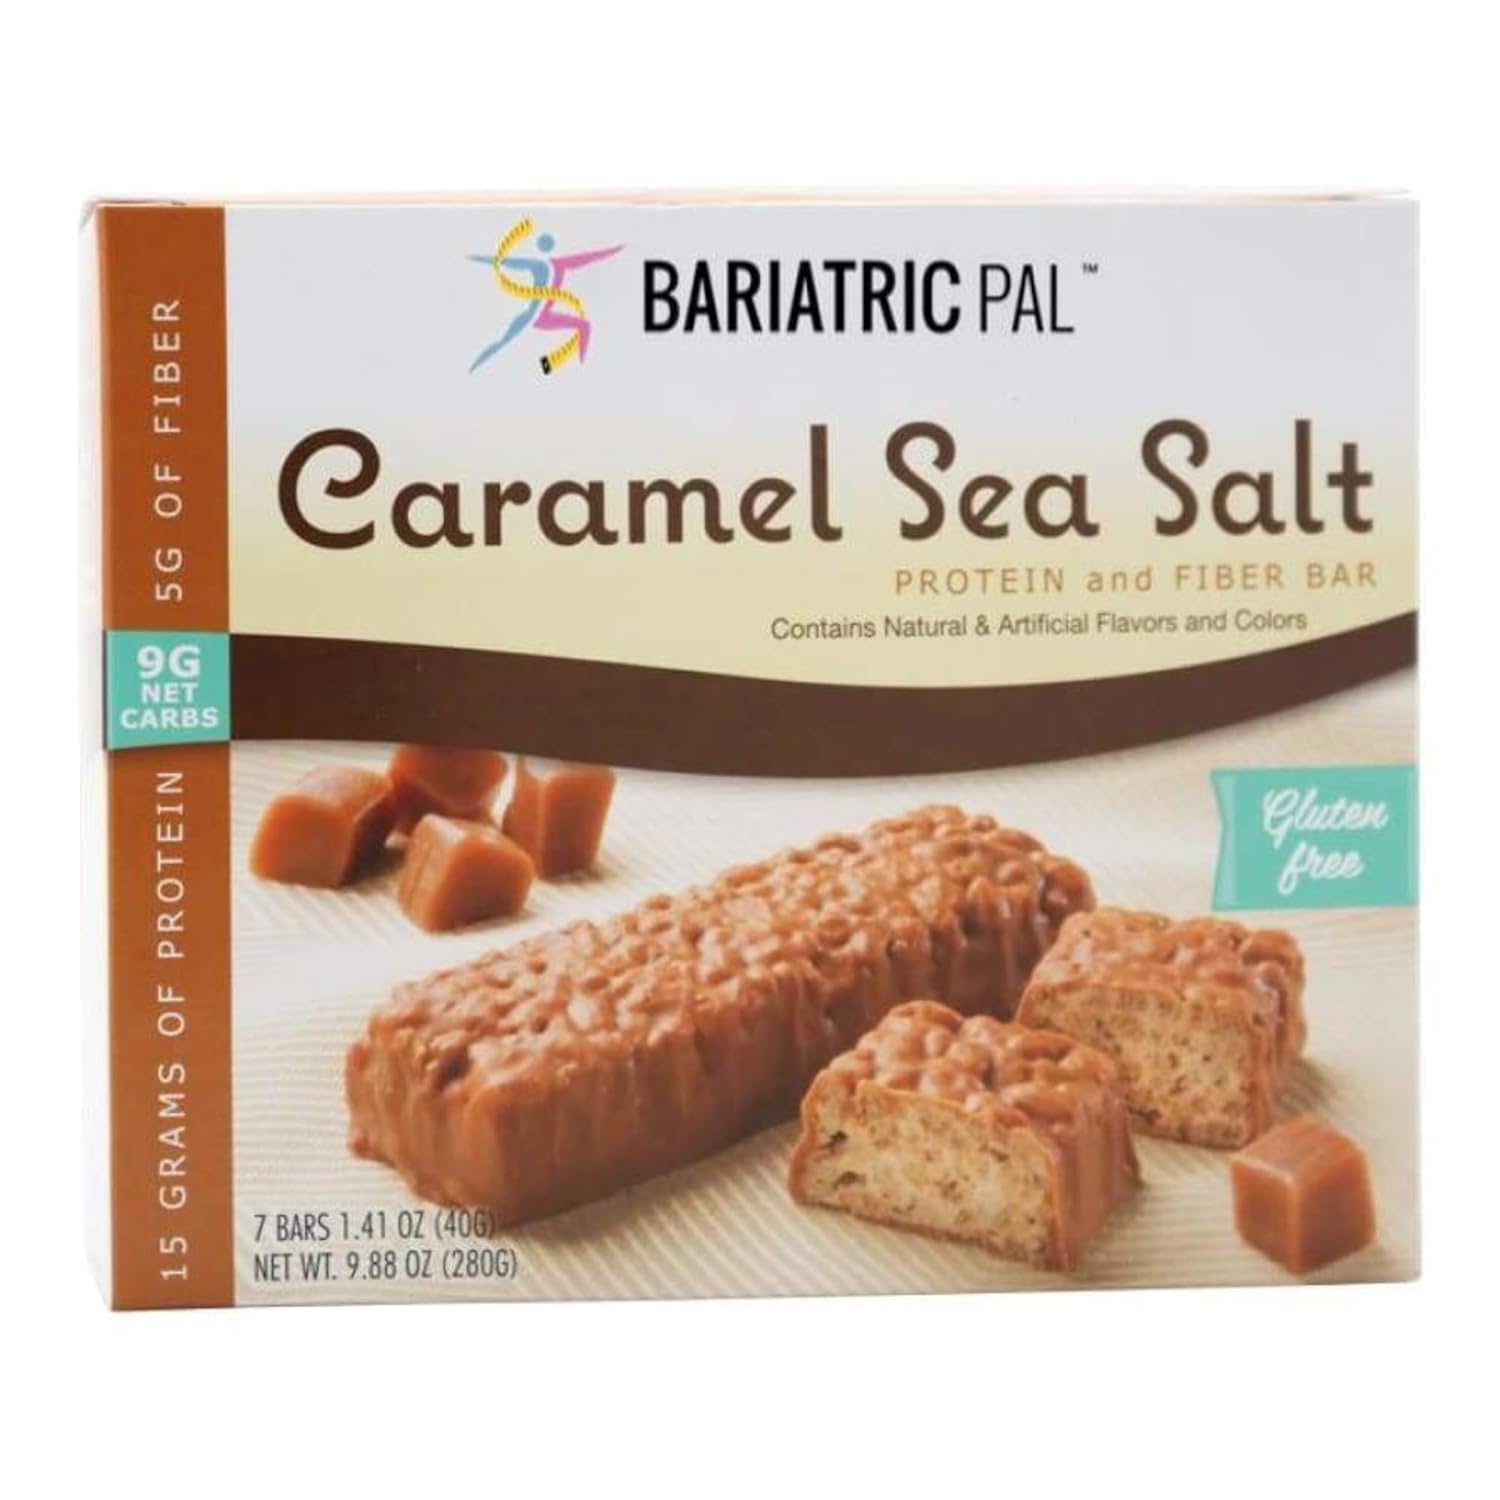 BariatricPal Divine 15g Protein & Fiber Bars - Caramel Sea Salt (1-Pack)